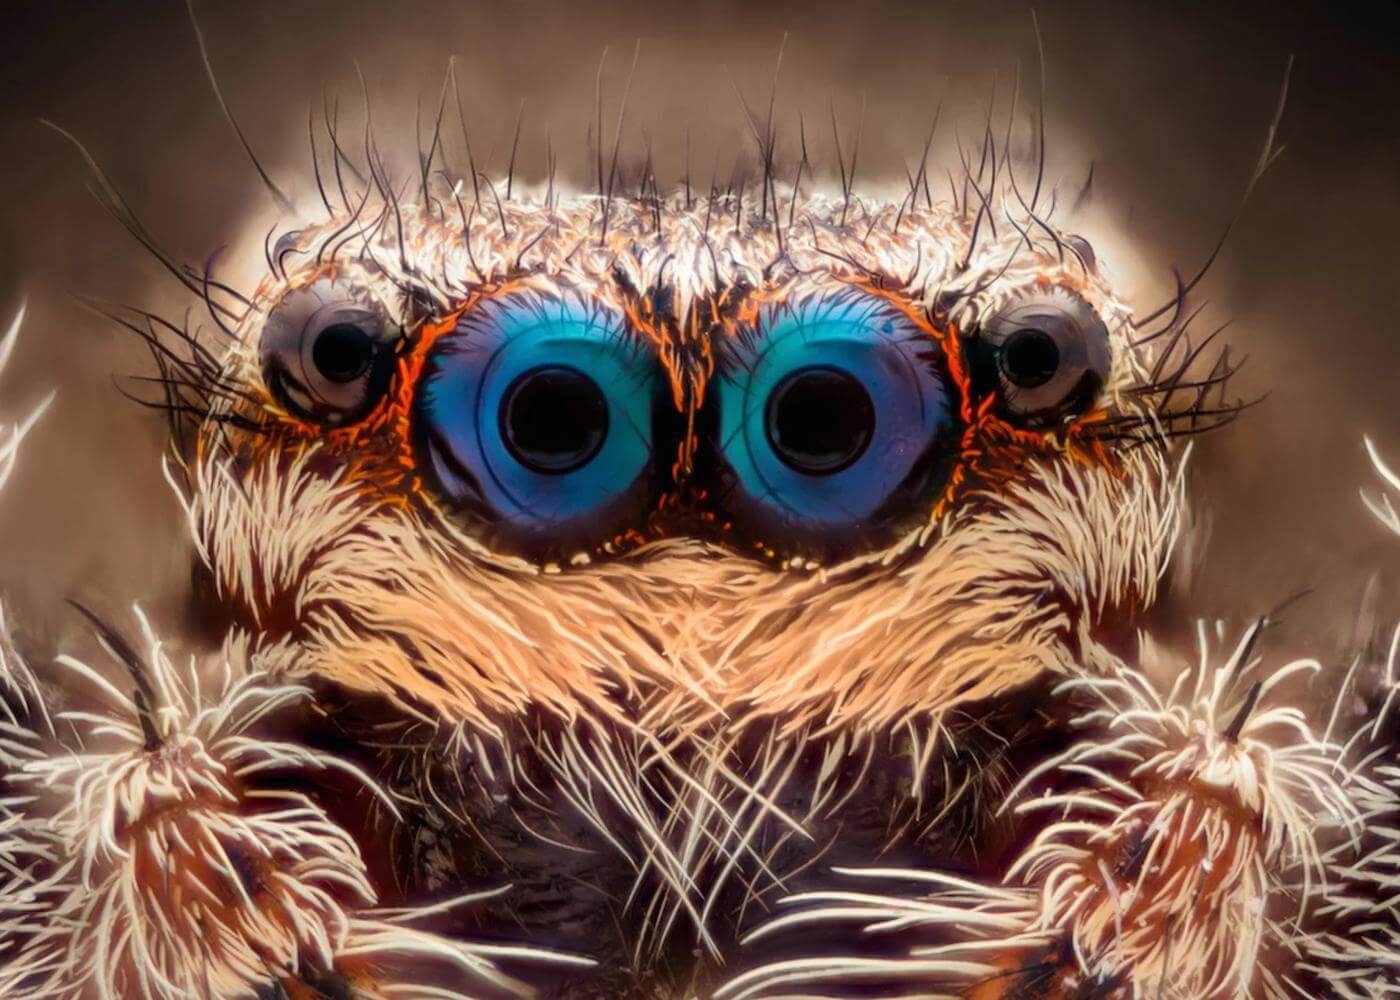 Berbeda dengan laba-laba lainnya, laba-laba peloncat (Phidippus audax) memiliki penglihatan yang sangat baik yang membantunya menemukan mangsa. Ia dapat melihat hampir ke segala arah dengan kedelapan matanya